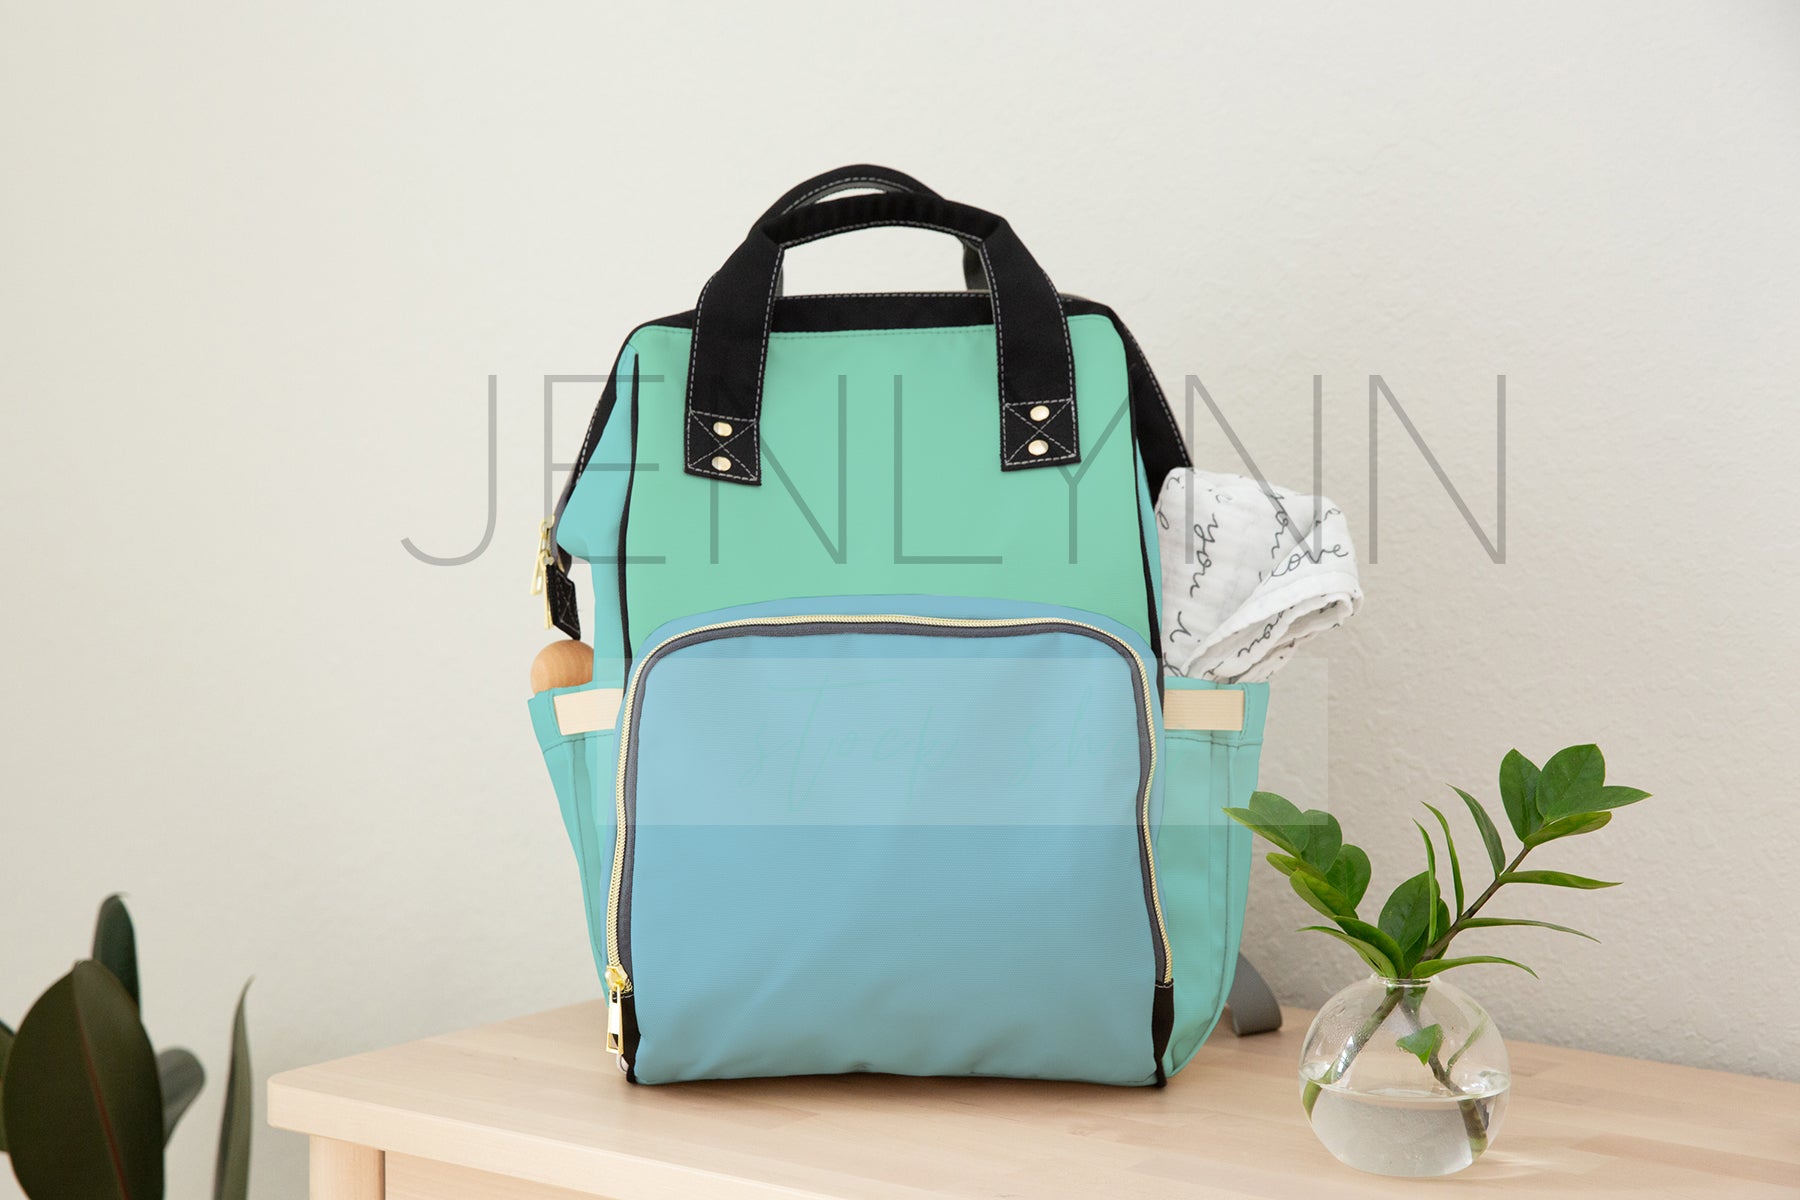 Custom Diaper Bag Backpack Mockup #5 PSD